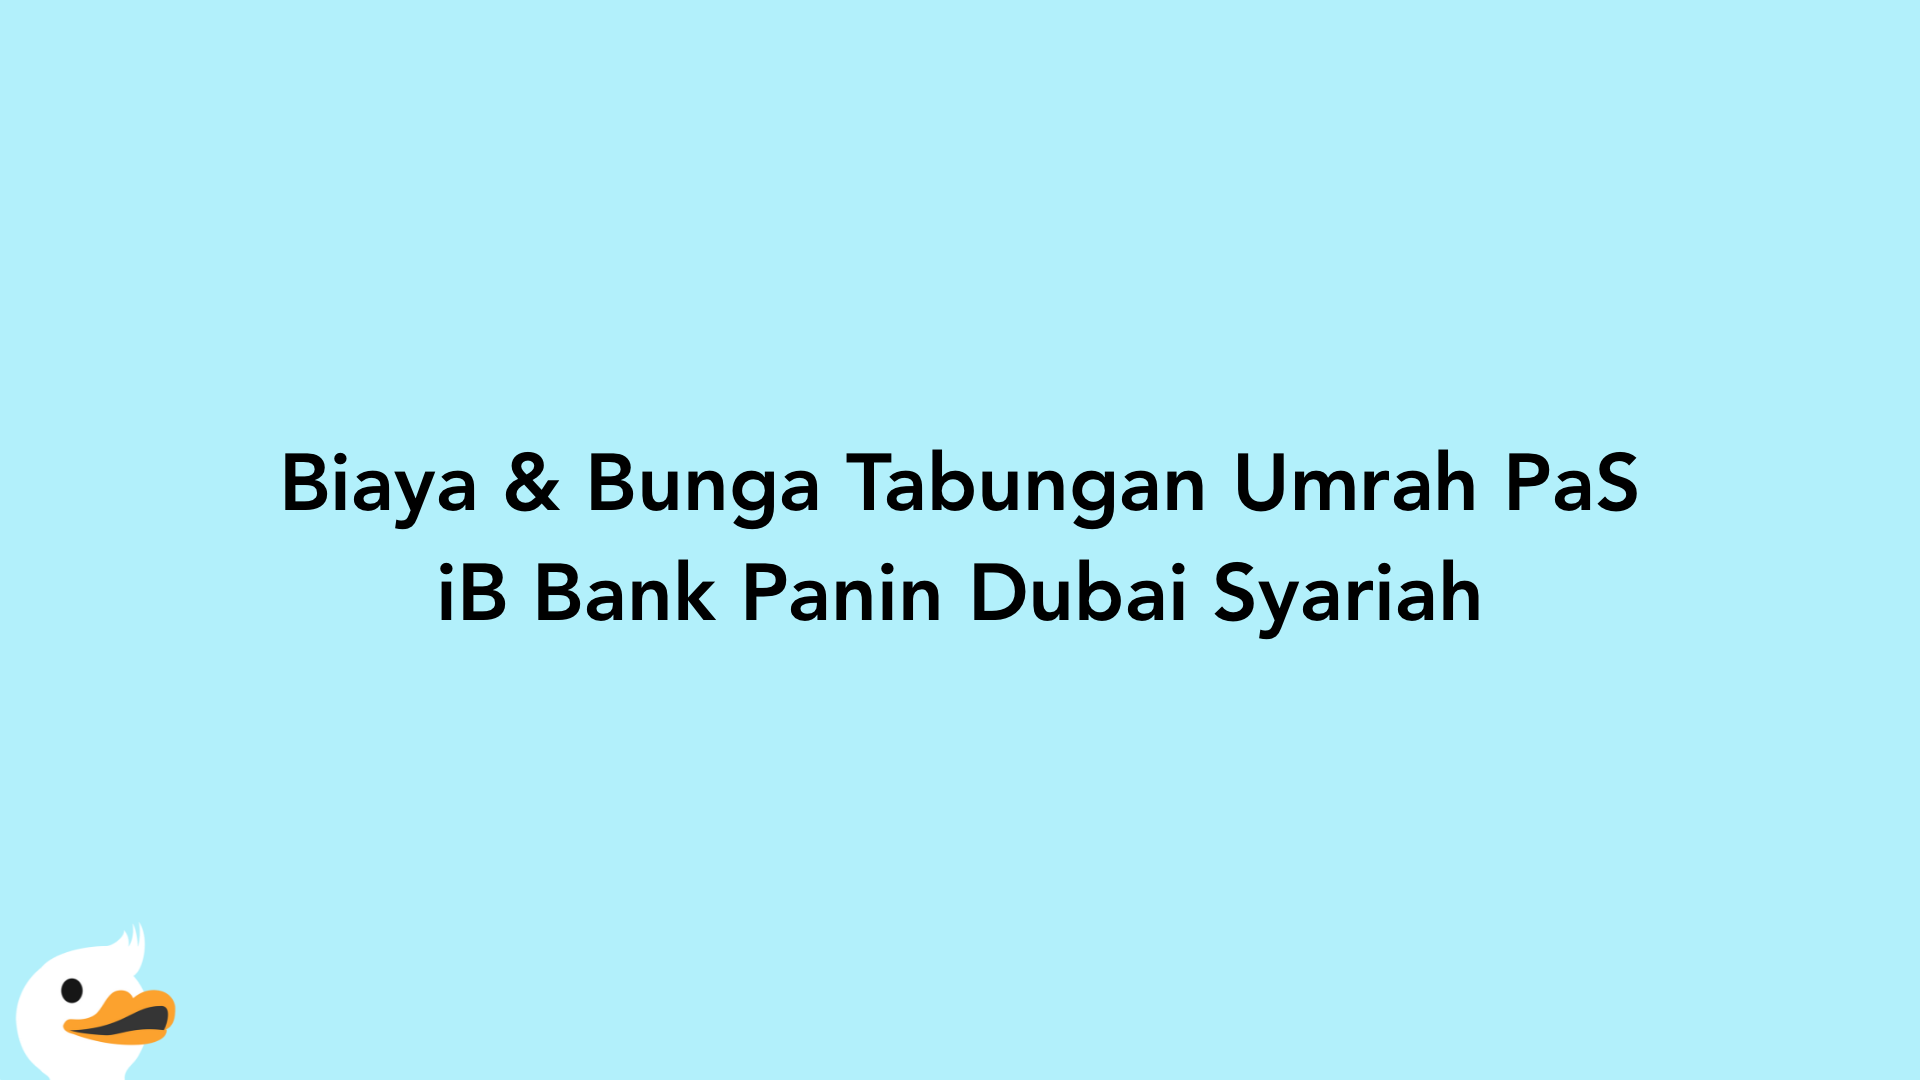 Biaya & Bunga Tabungan Umrah PaS iB Bank Panin Dubai Syariah